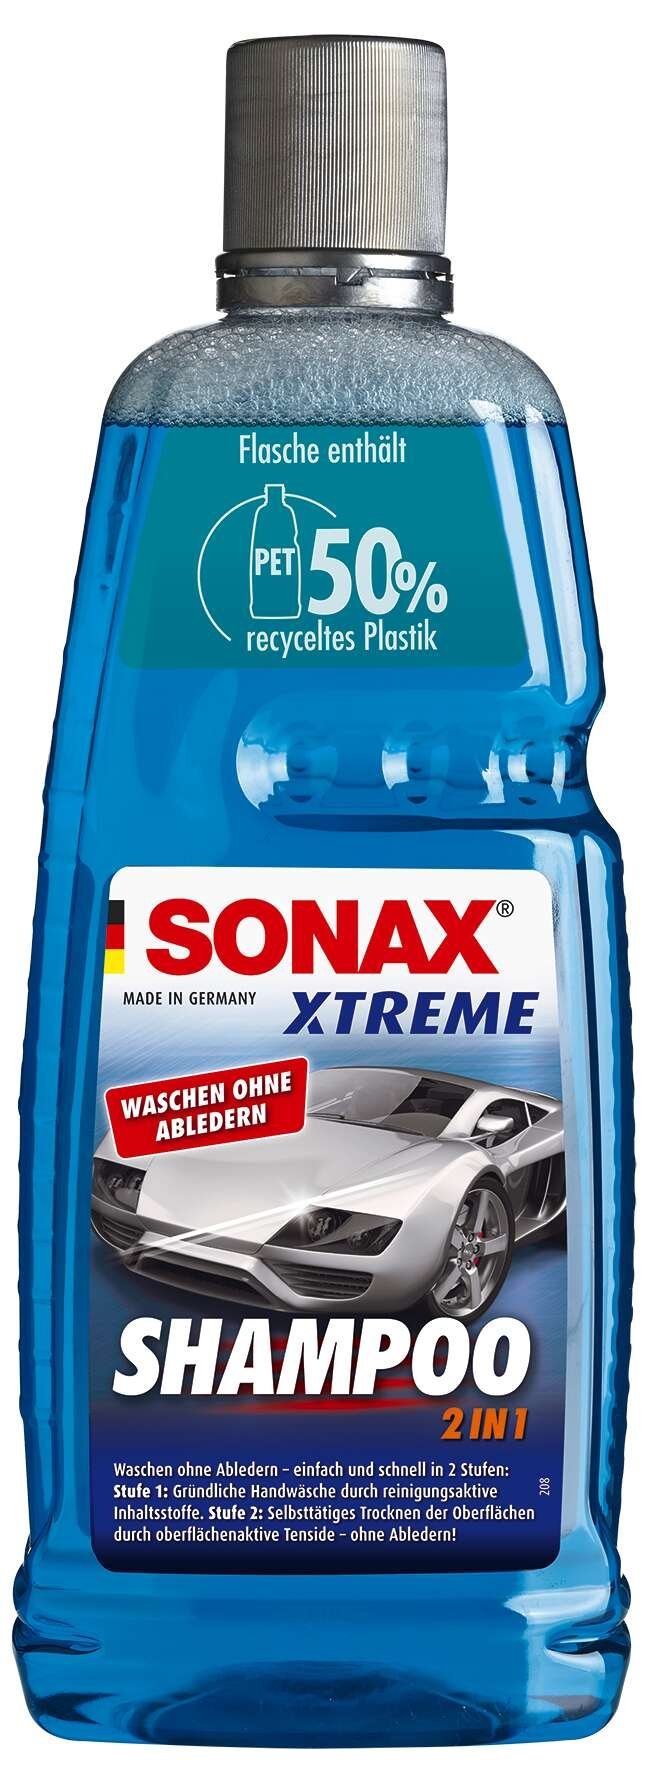 SONAX XTREME Shampoo 2in1 flacone PET da 1000 ml